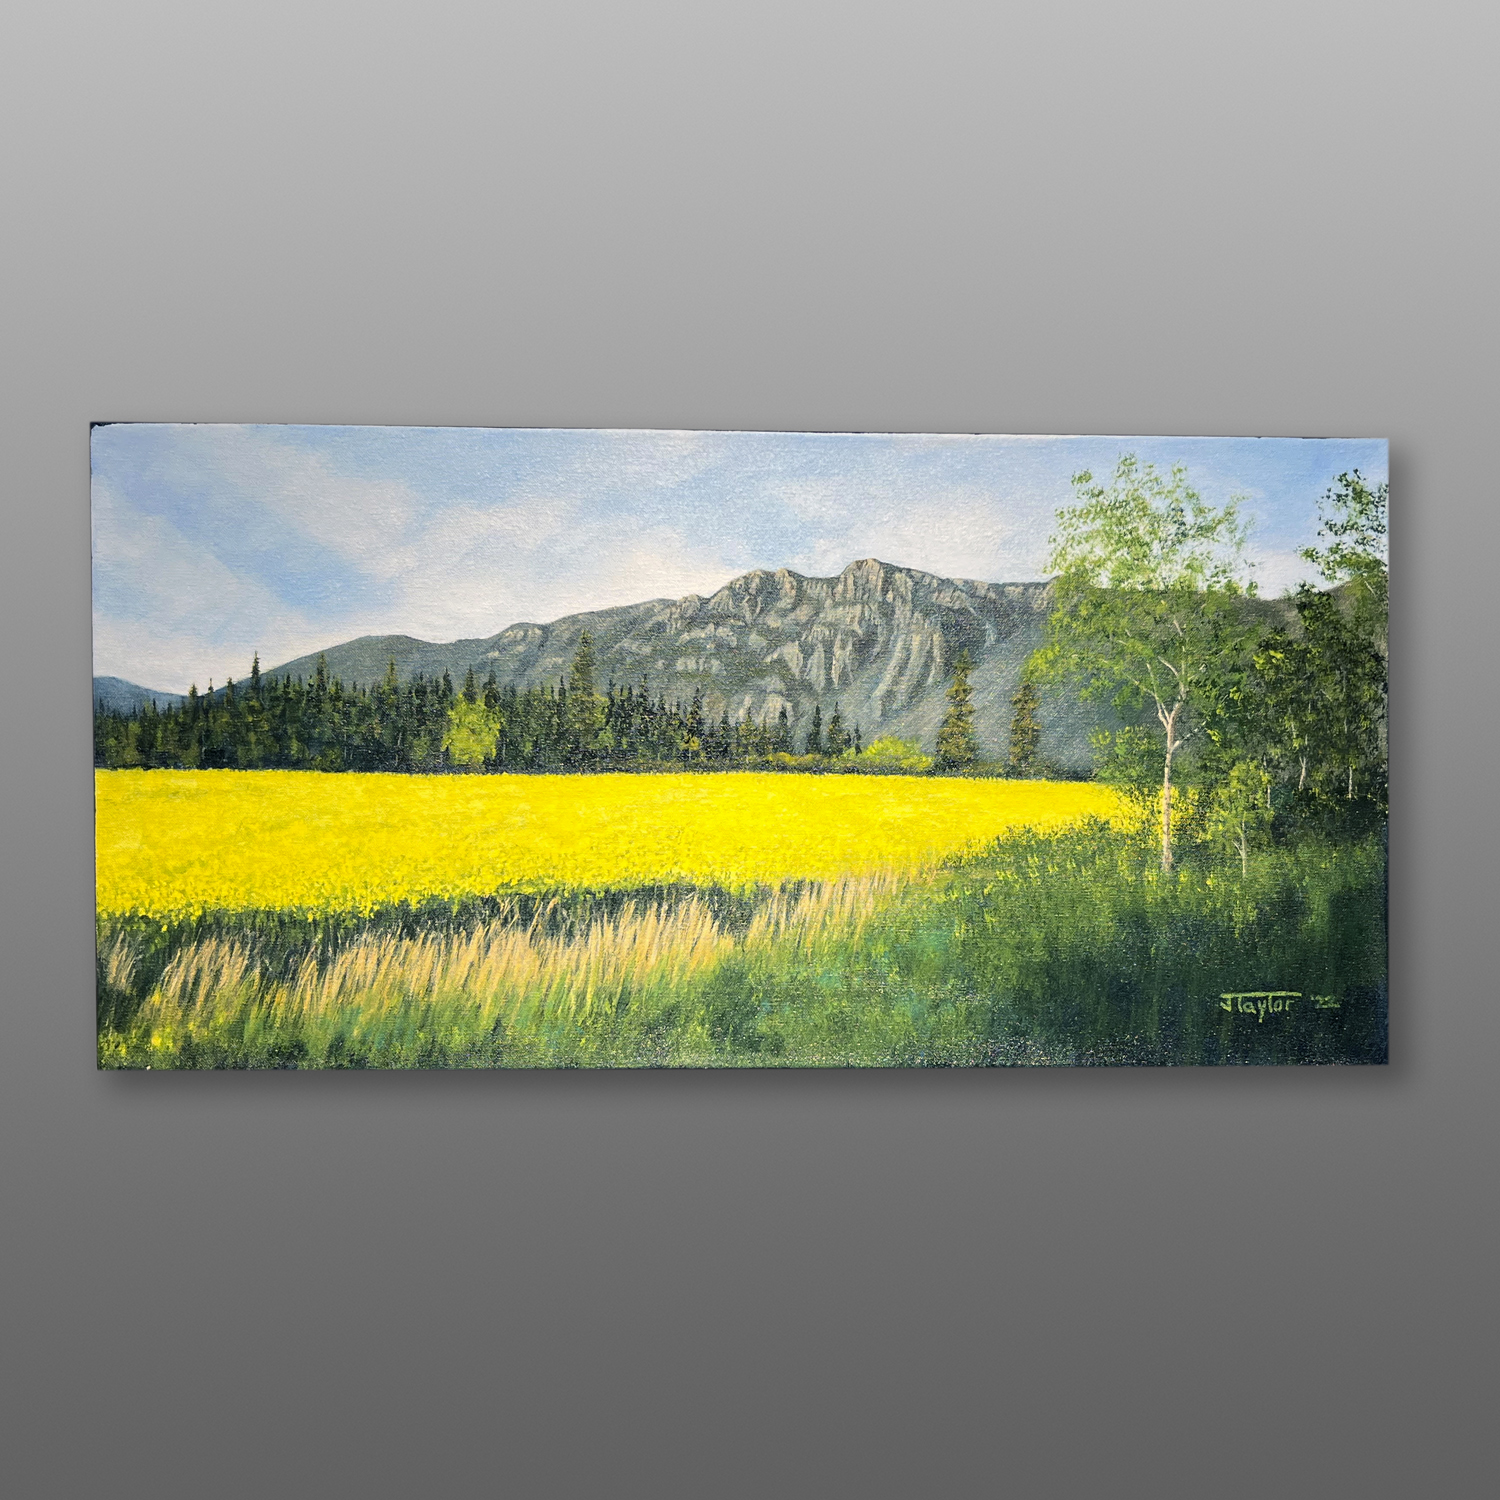 Leaving Idaho
Jean Taylor
Tlingit
Acrylic on canvas
30" x 15" x 1½”
$1280